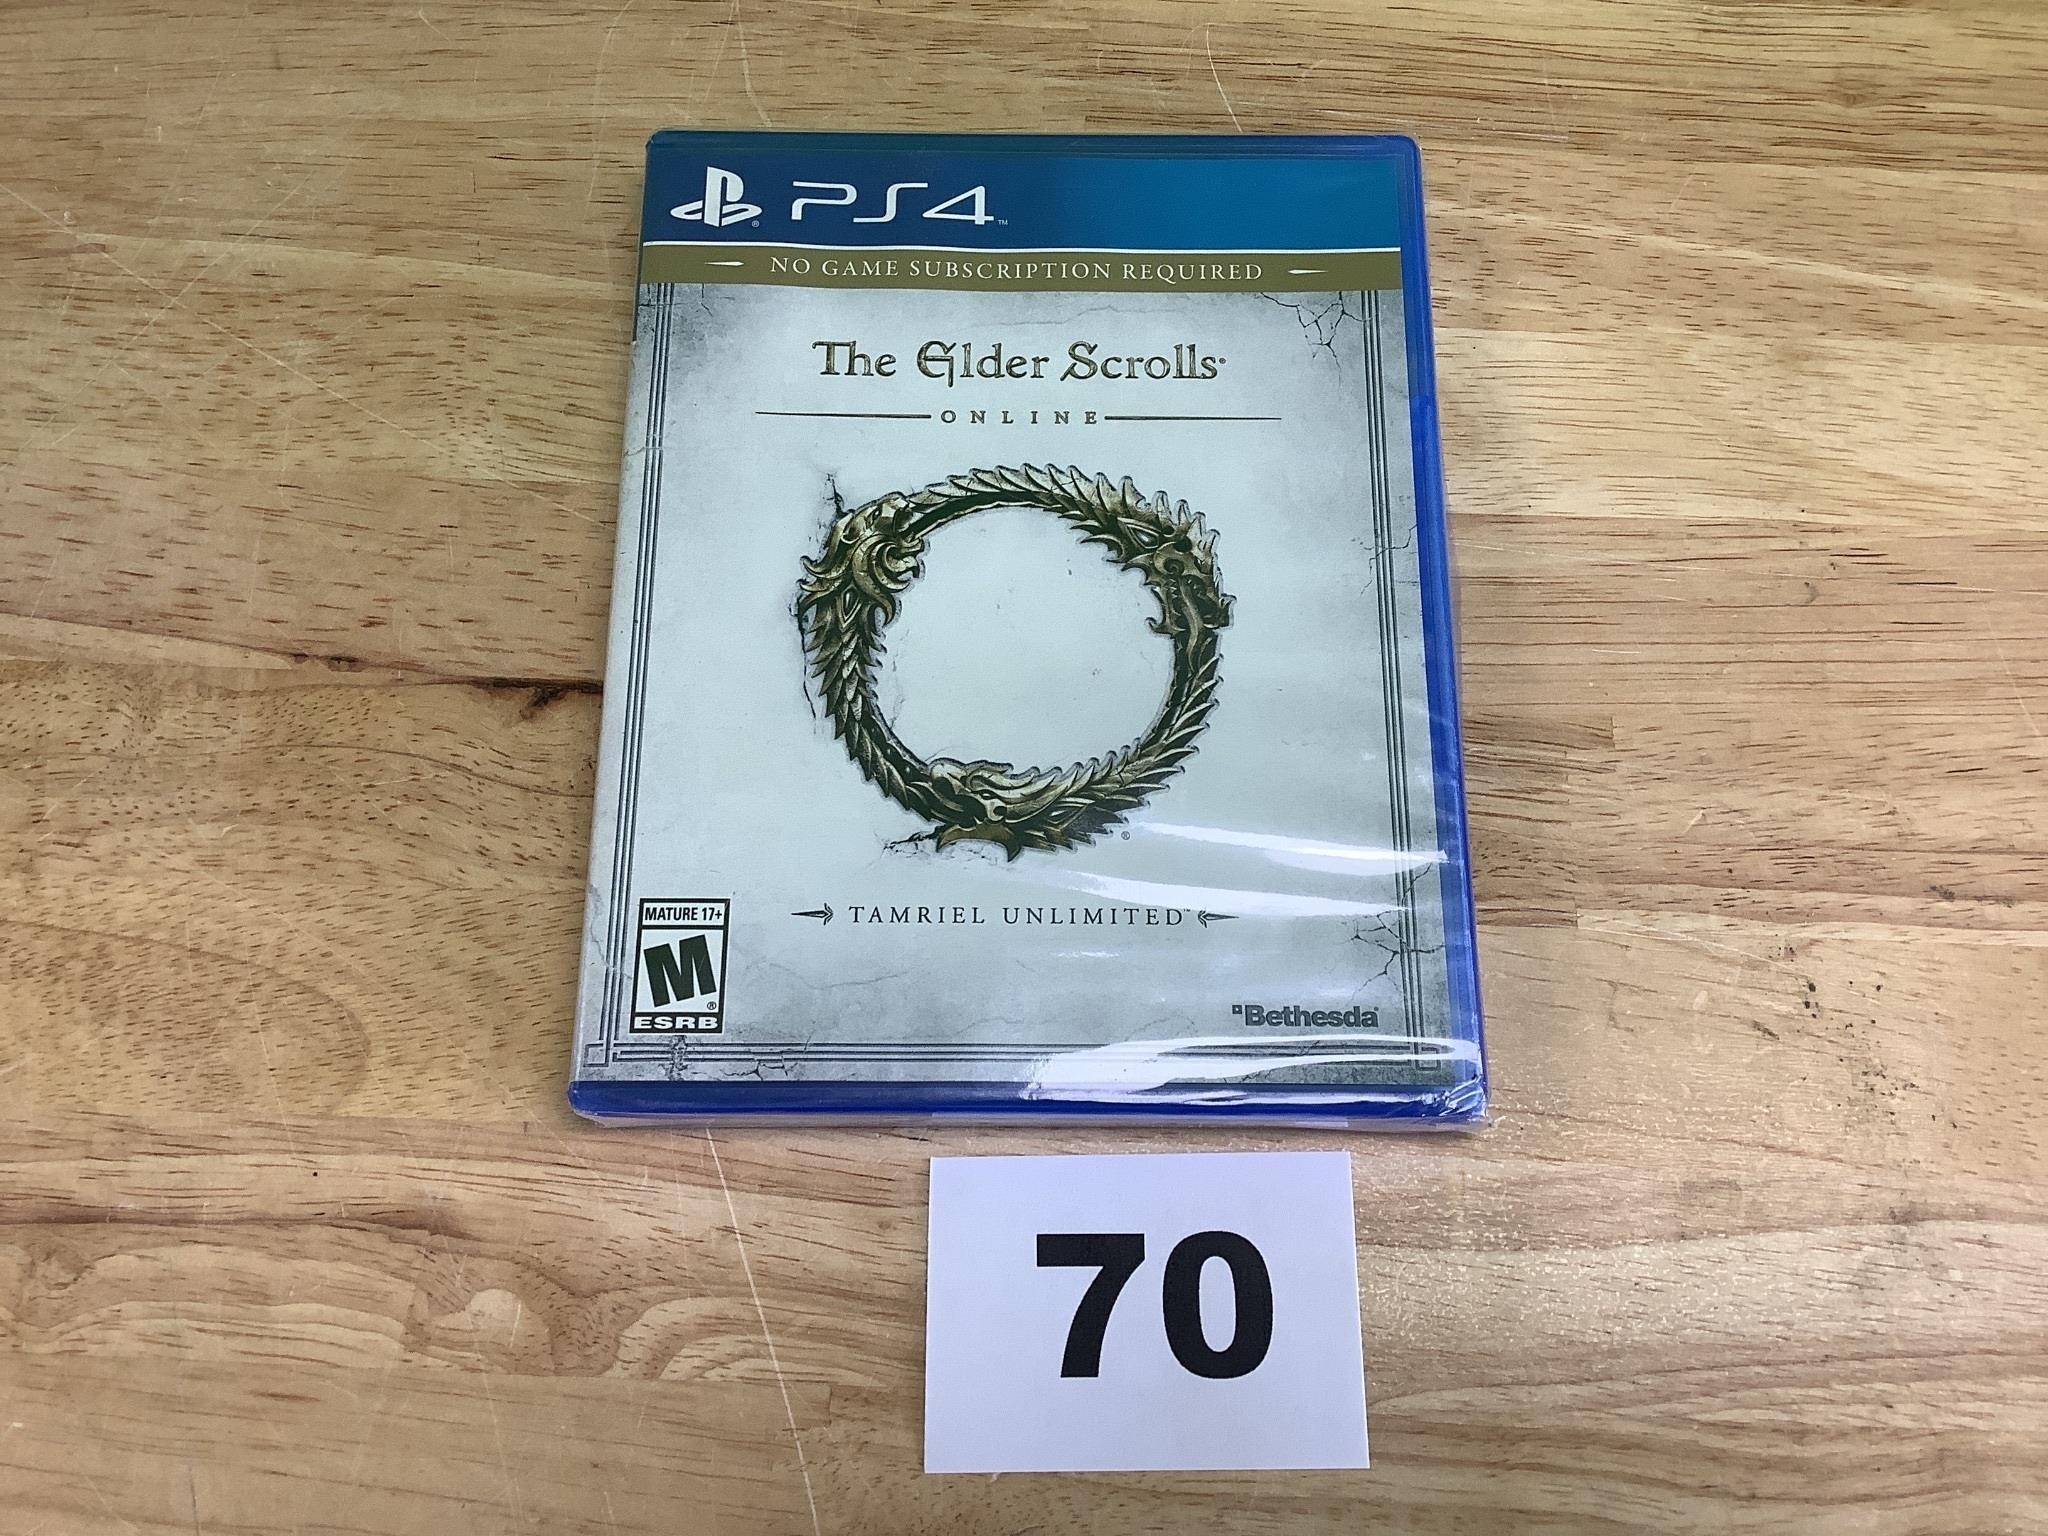 The Elder Scrolls Online Tamriel Unlimited for PS4